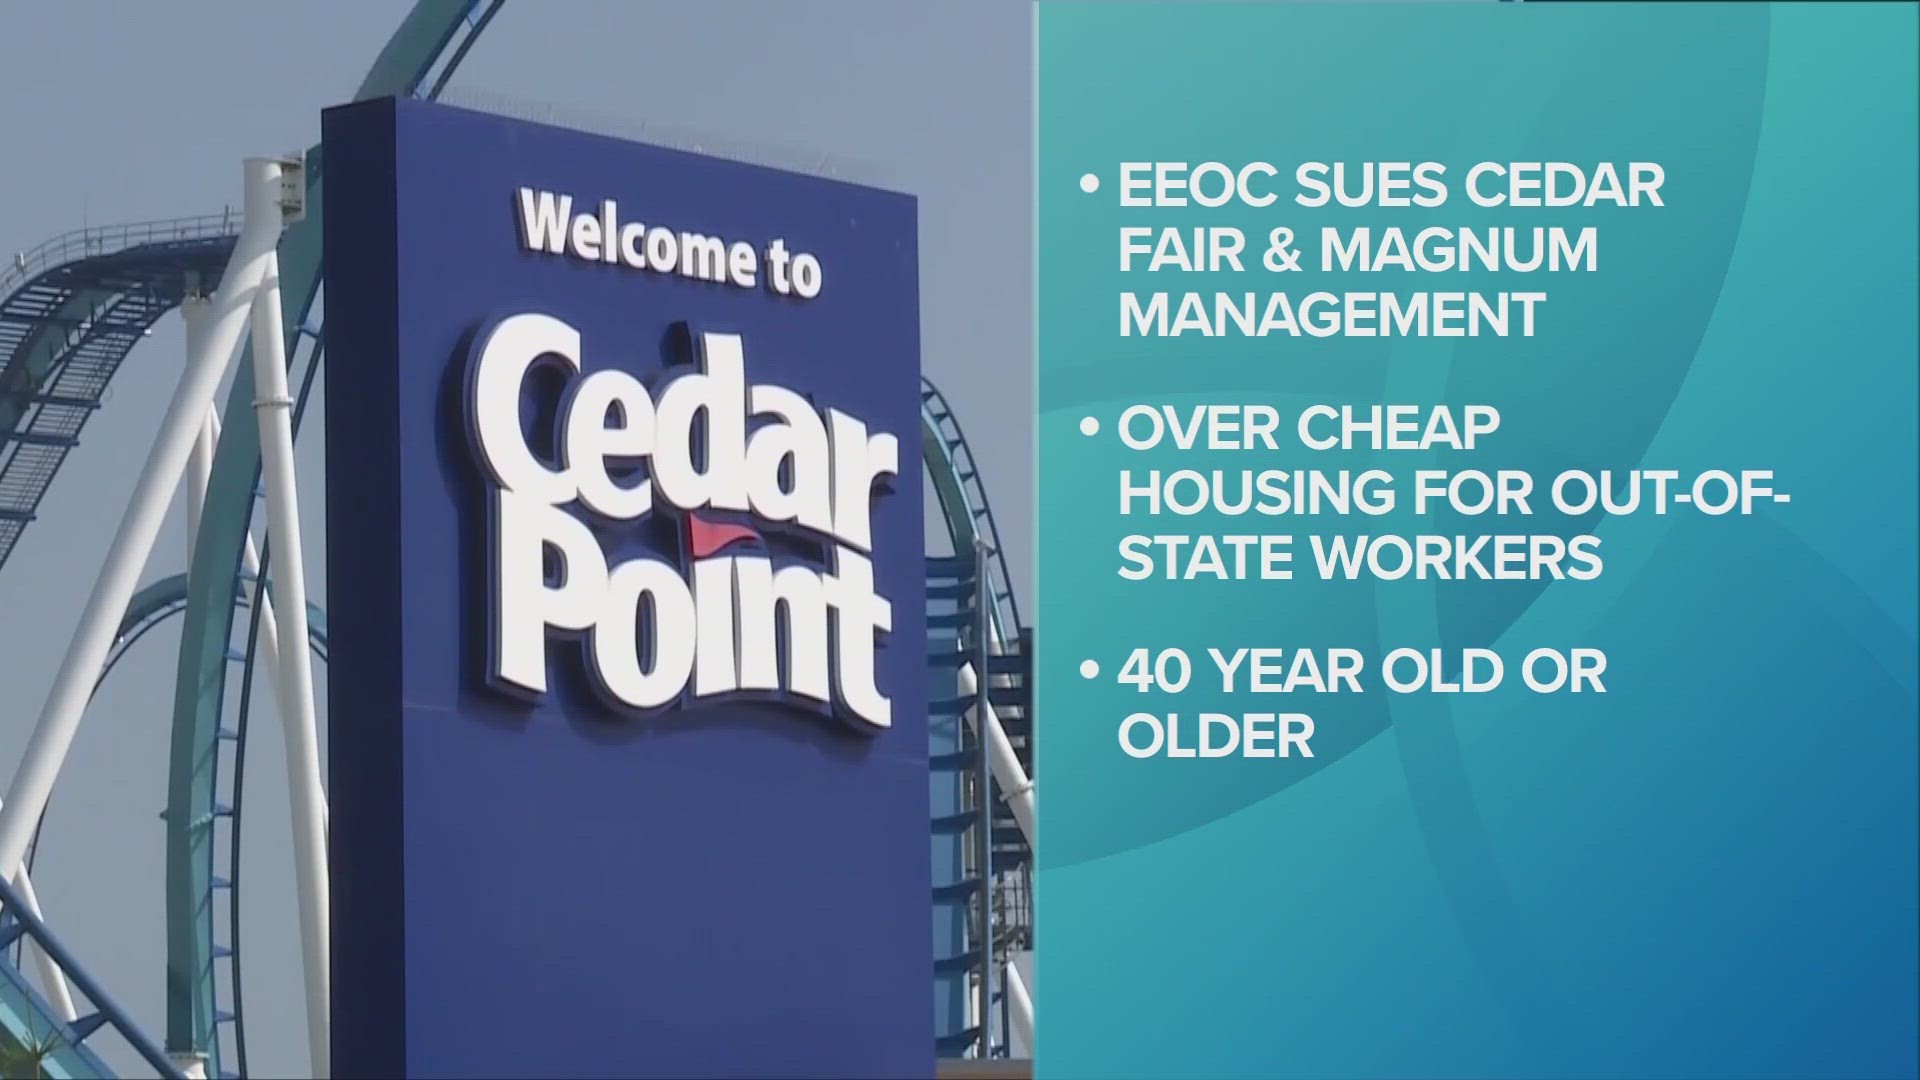 Cedar Fair sued by EEOC for age discrimination | wkyc.com